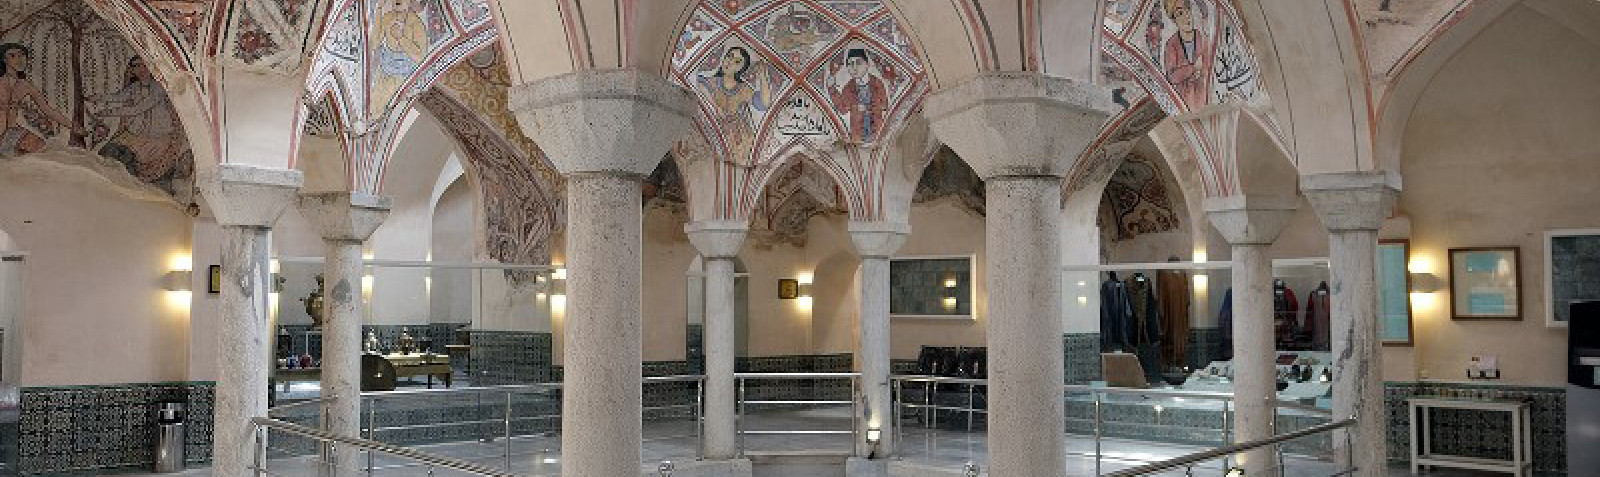 The Historical Bath of Mahdi Gholi Beig-Ethnography Museum (Razavi Khorasan)